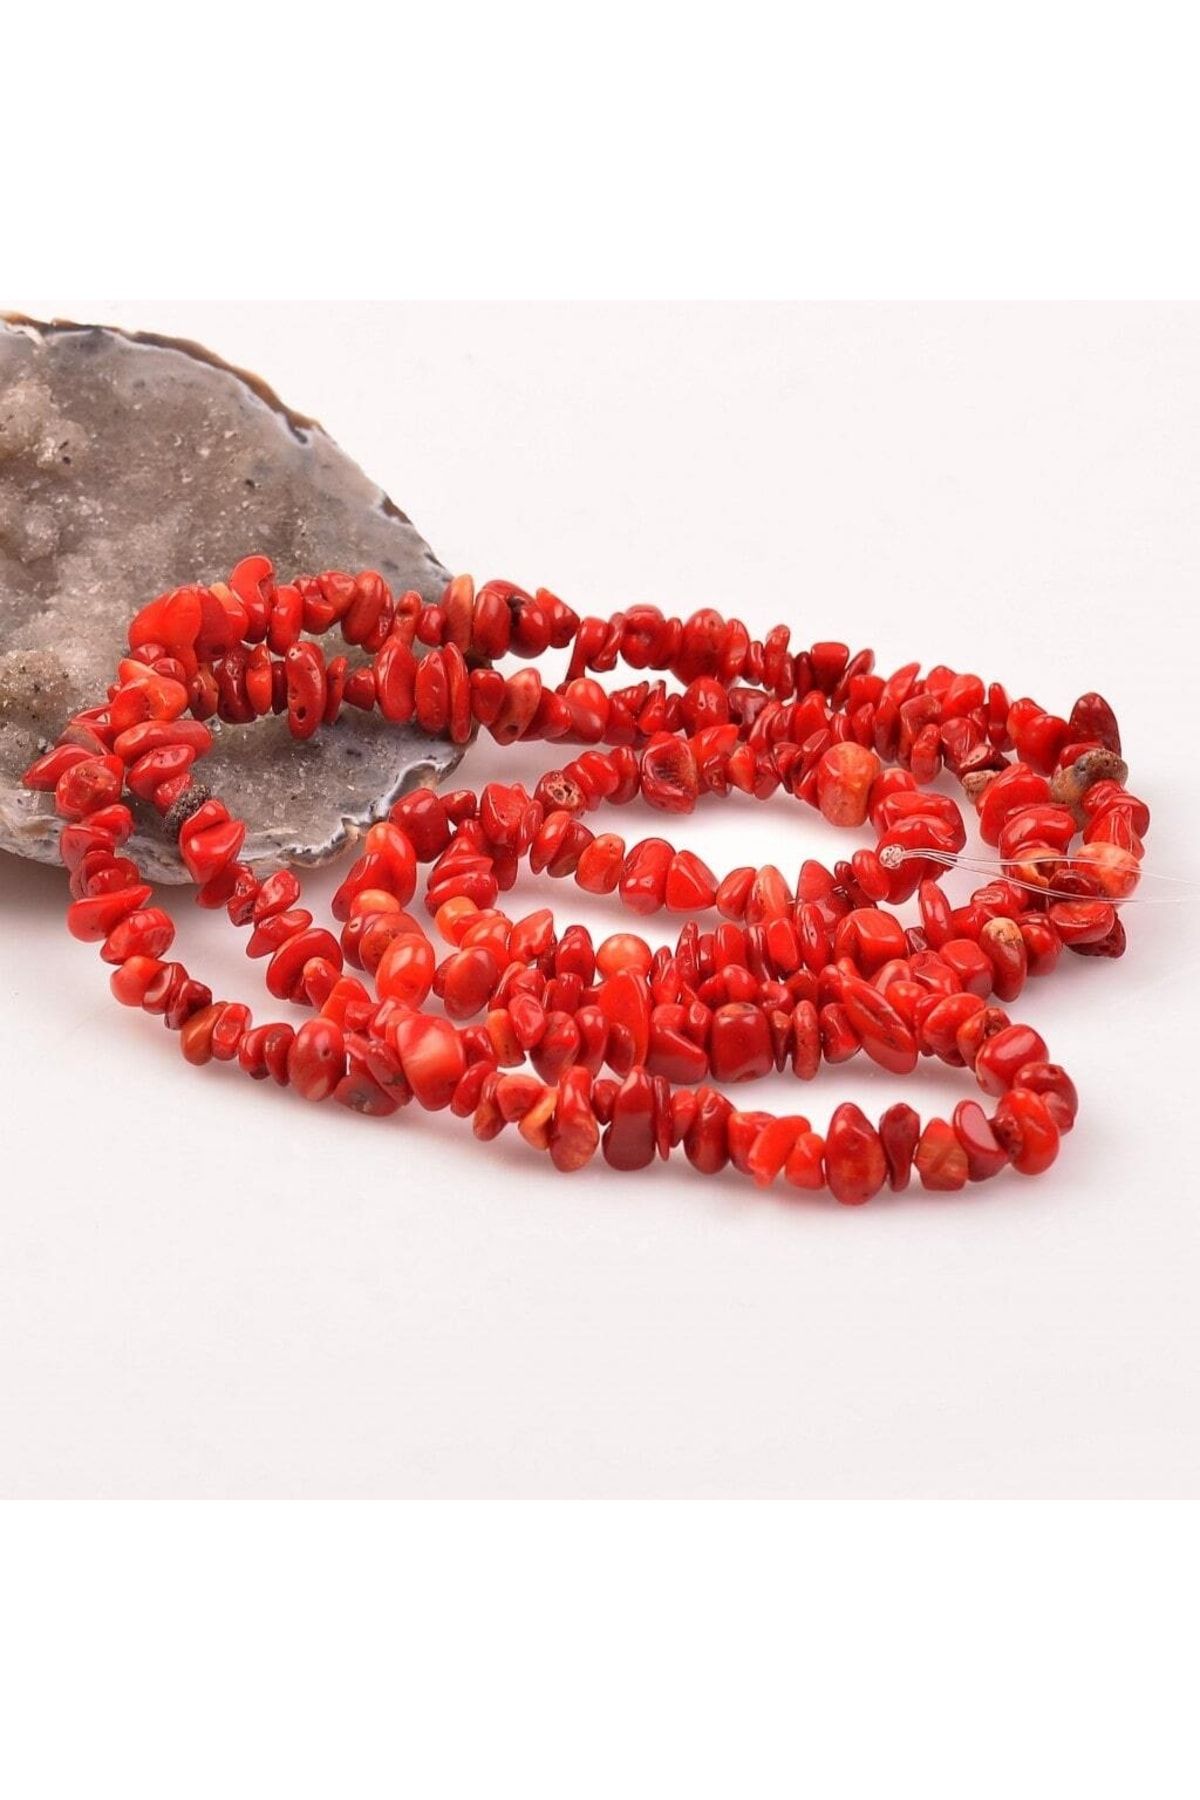 NATURALİM Kırmızı Mercan Taşı Doğal Taş Kırık Taş Dizi 80 Cm Orjinal Doğal Taş Dizi